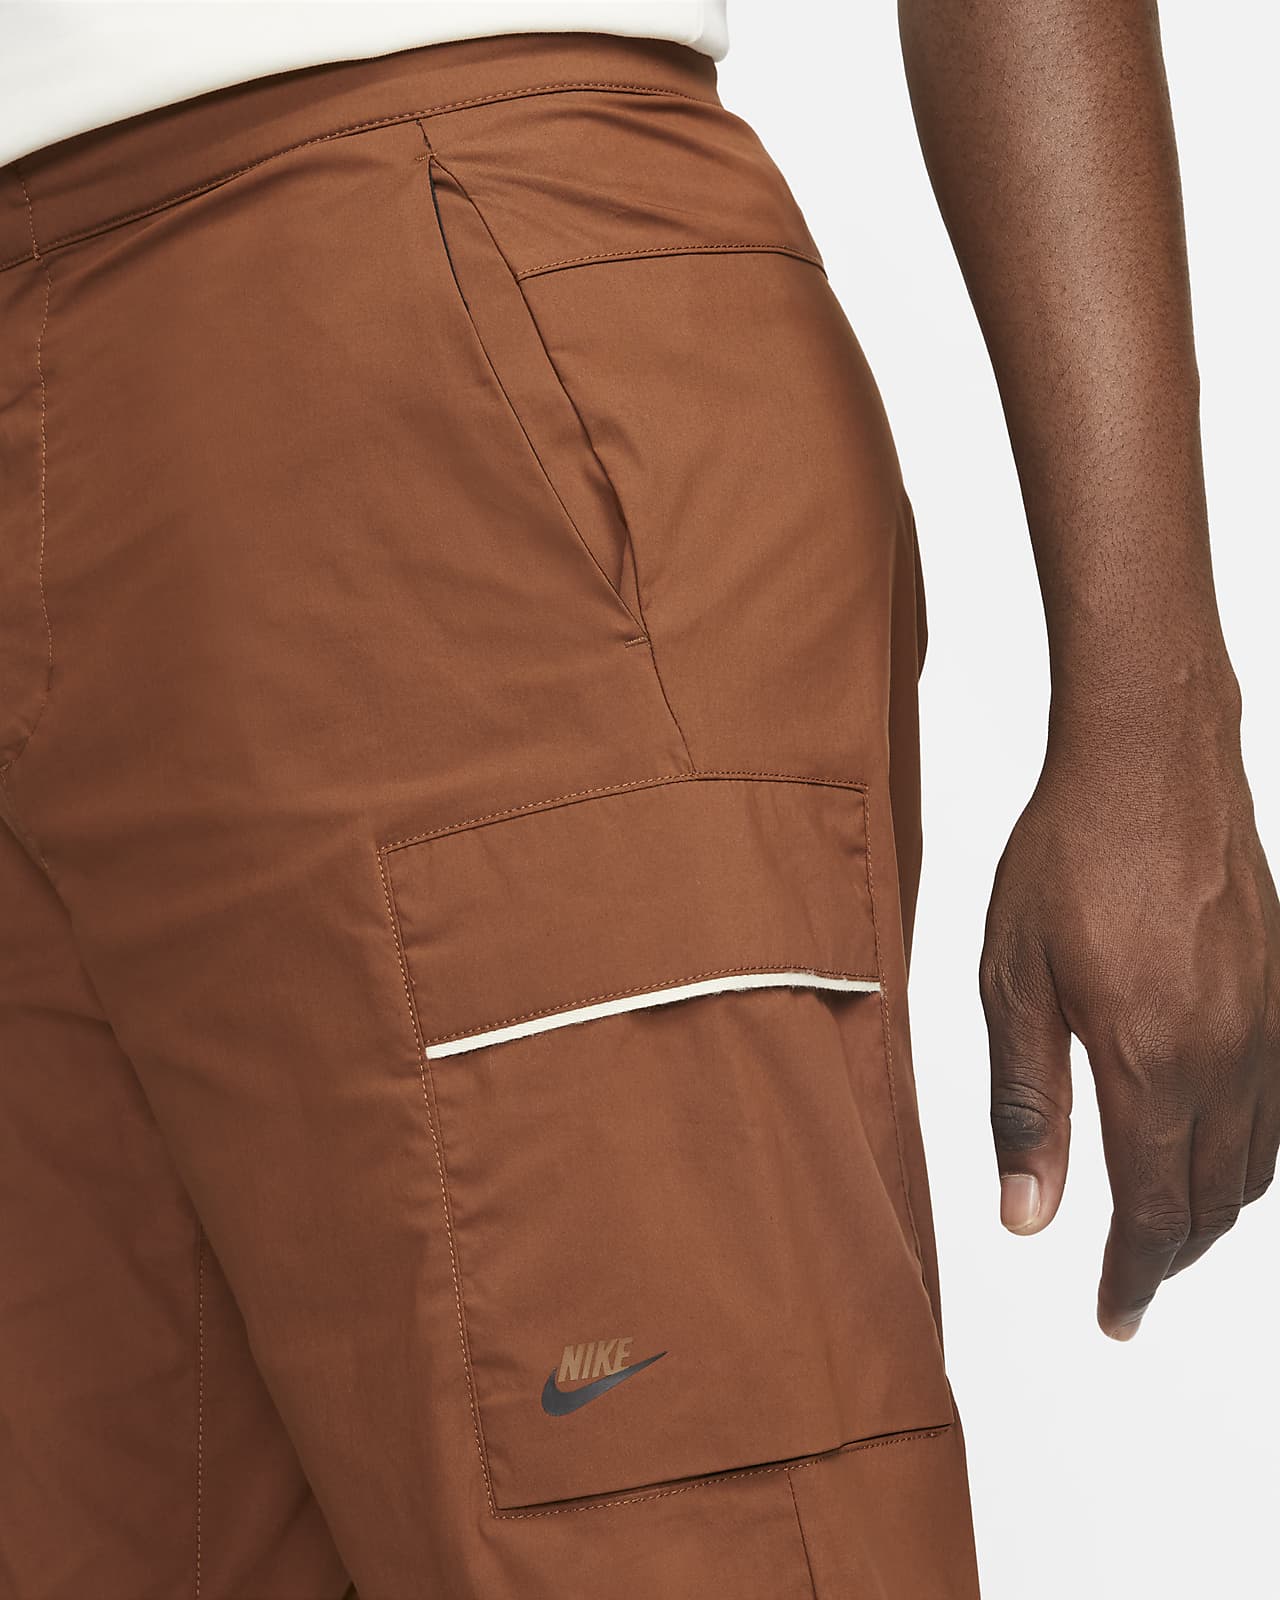 Orange 34                  EU H&M slacks WOMEN FASHION Trousers Slacks Shorts discount 63% 